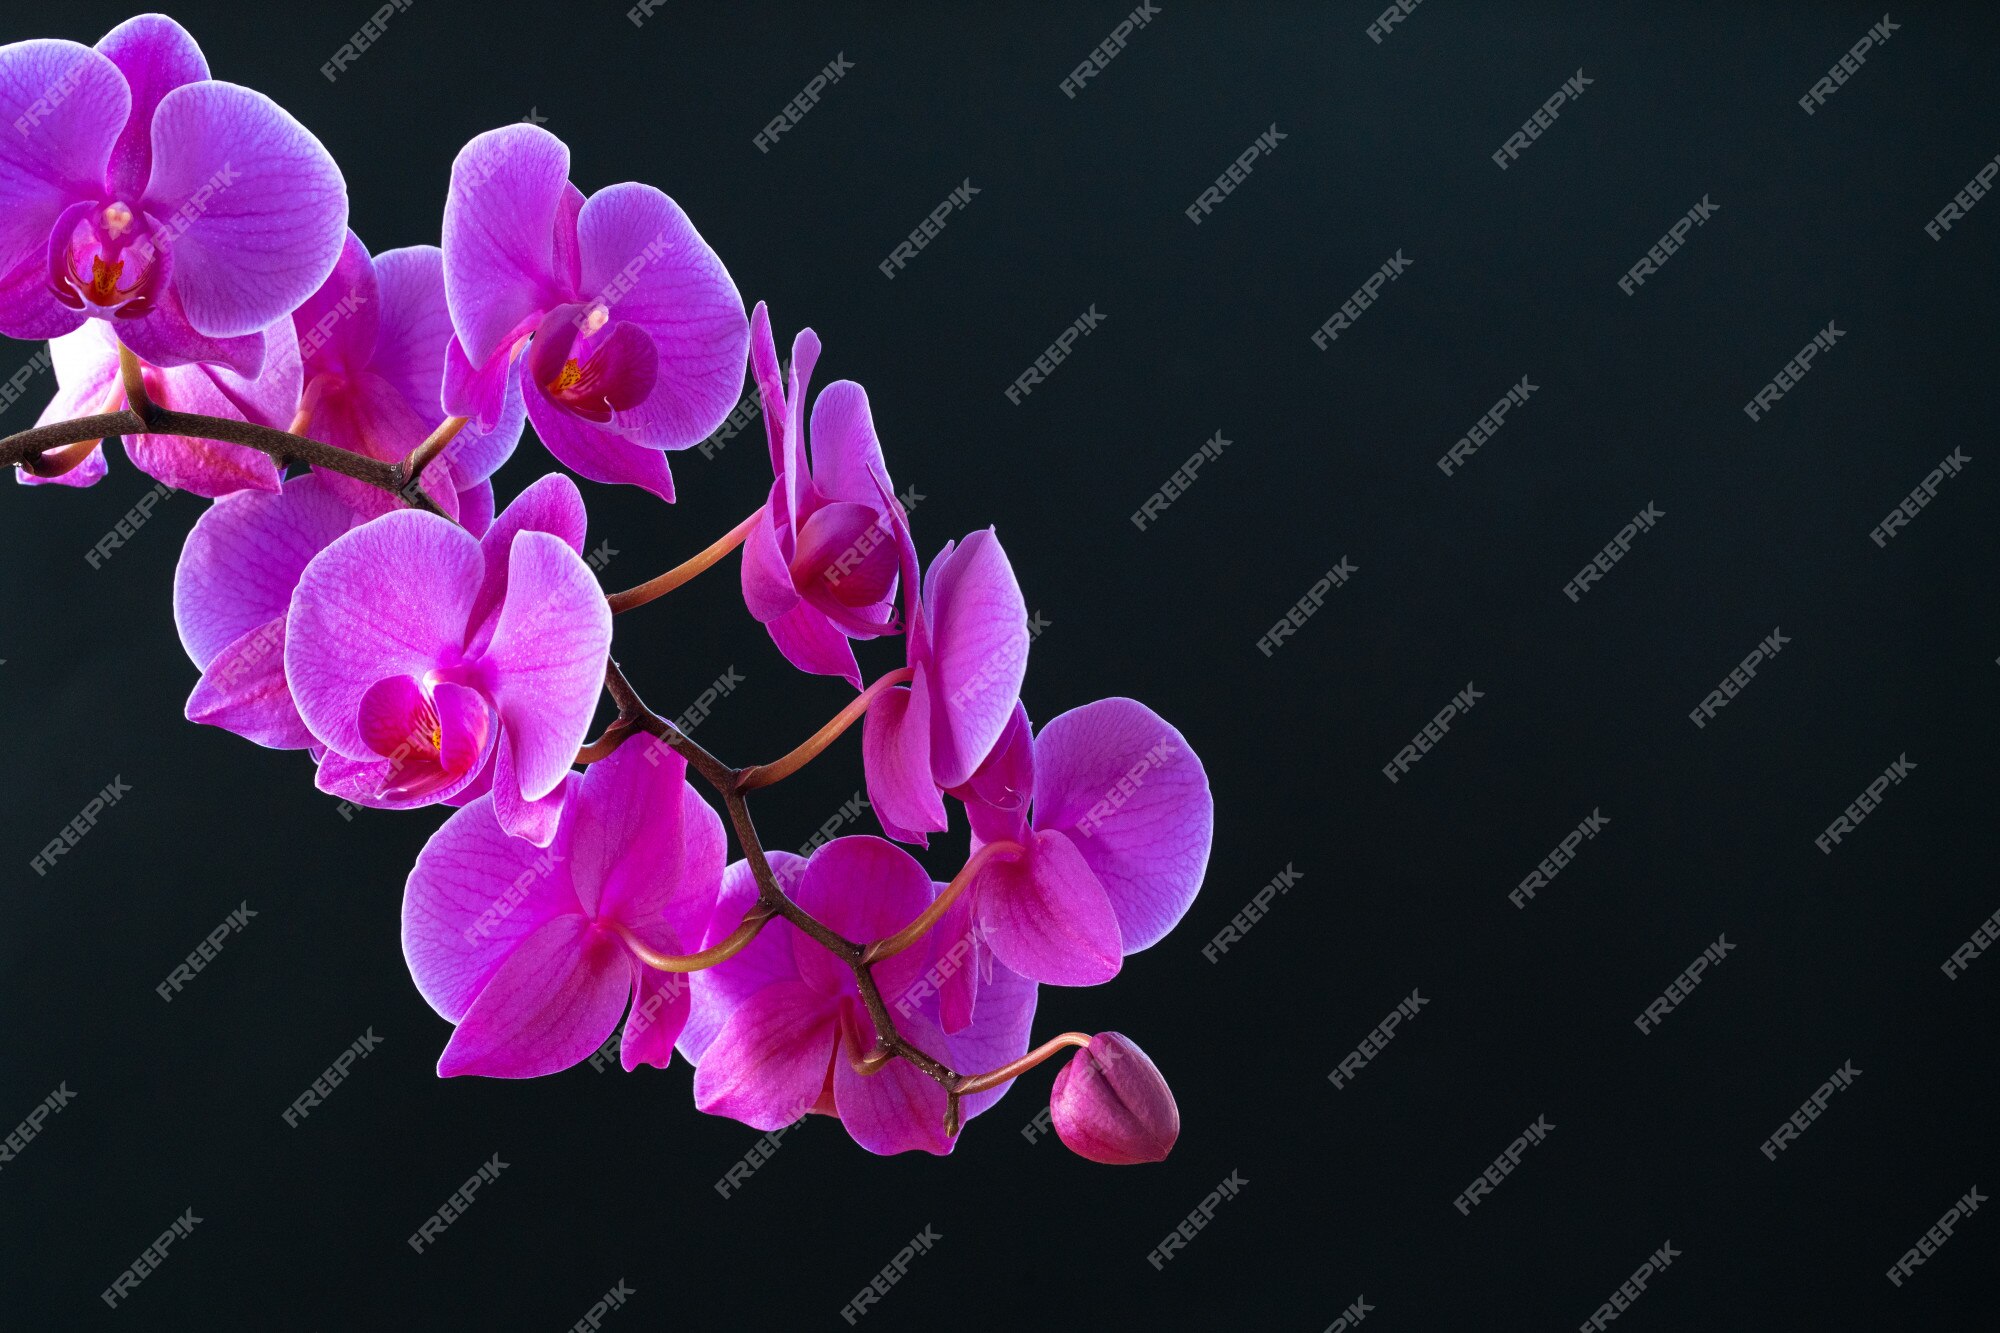 Ramo de orquídea roxa em fundo preto escuro close-up | Foto Premium